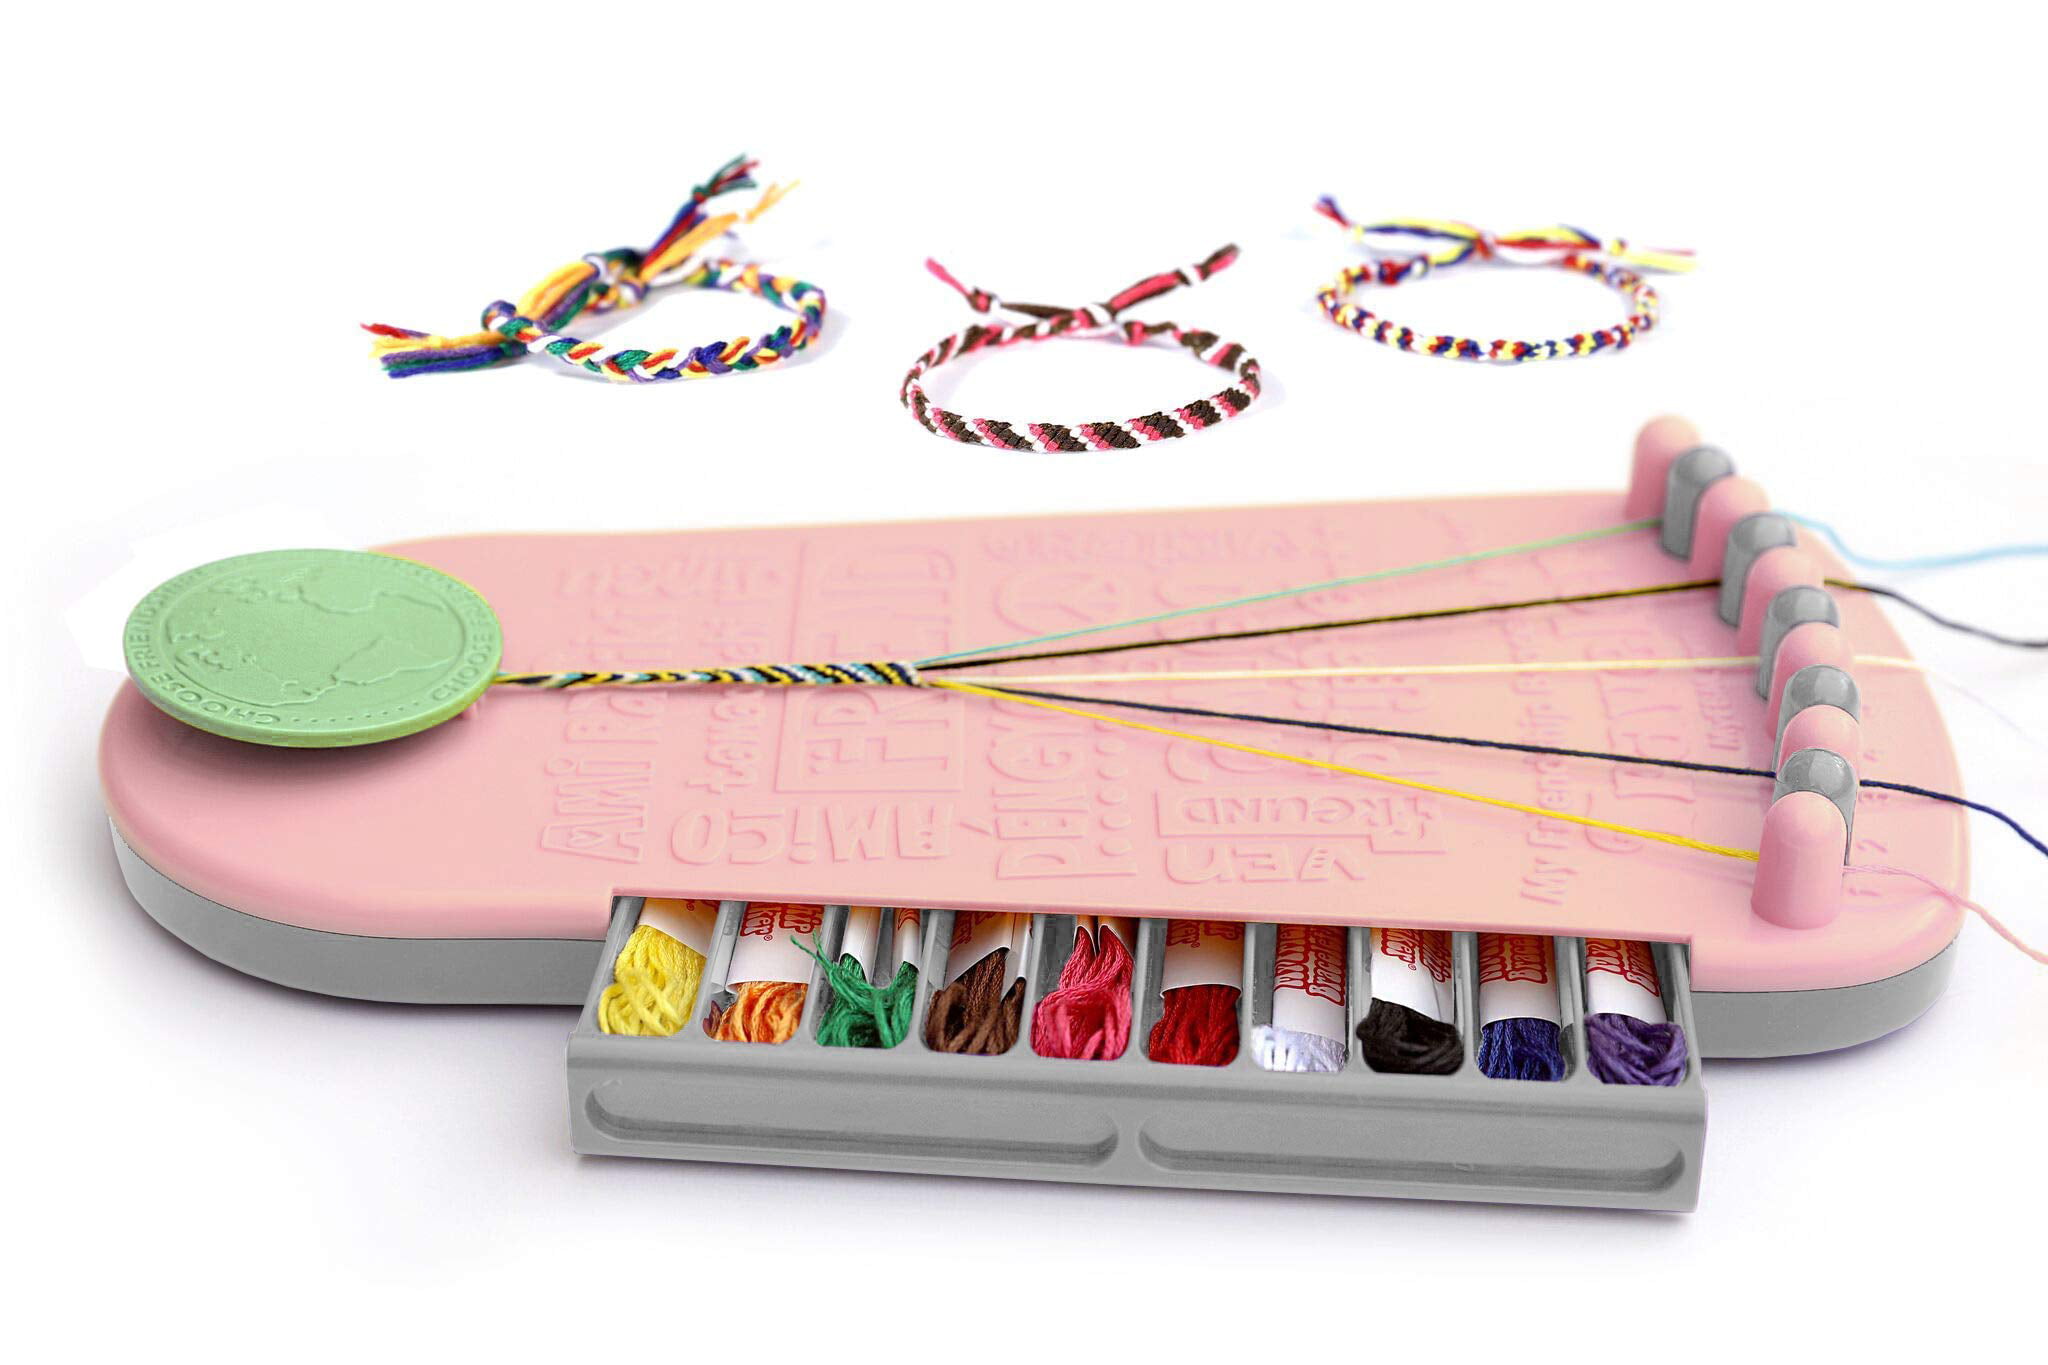 Choose Friendship, My Friendship Bracelet Maker®, 20 Pre-cut Threads -  Makes Up to 8 Bracelets (Craft Kit, Kids Jewelry Kit, Gifts for Girls 8-12)